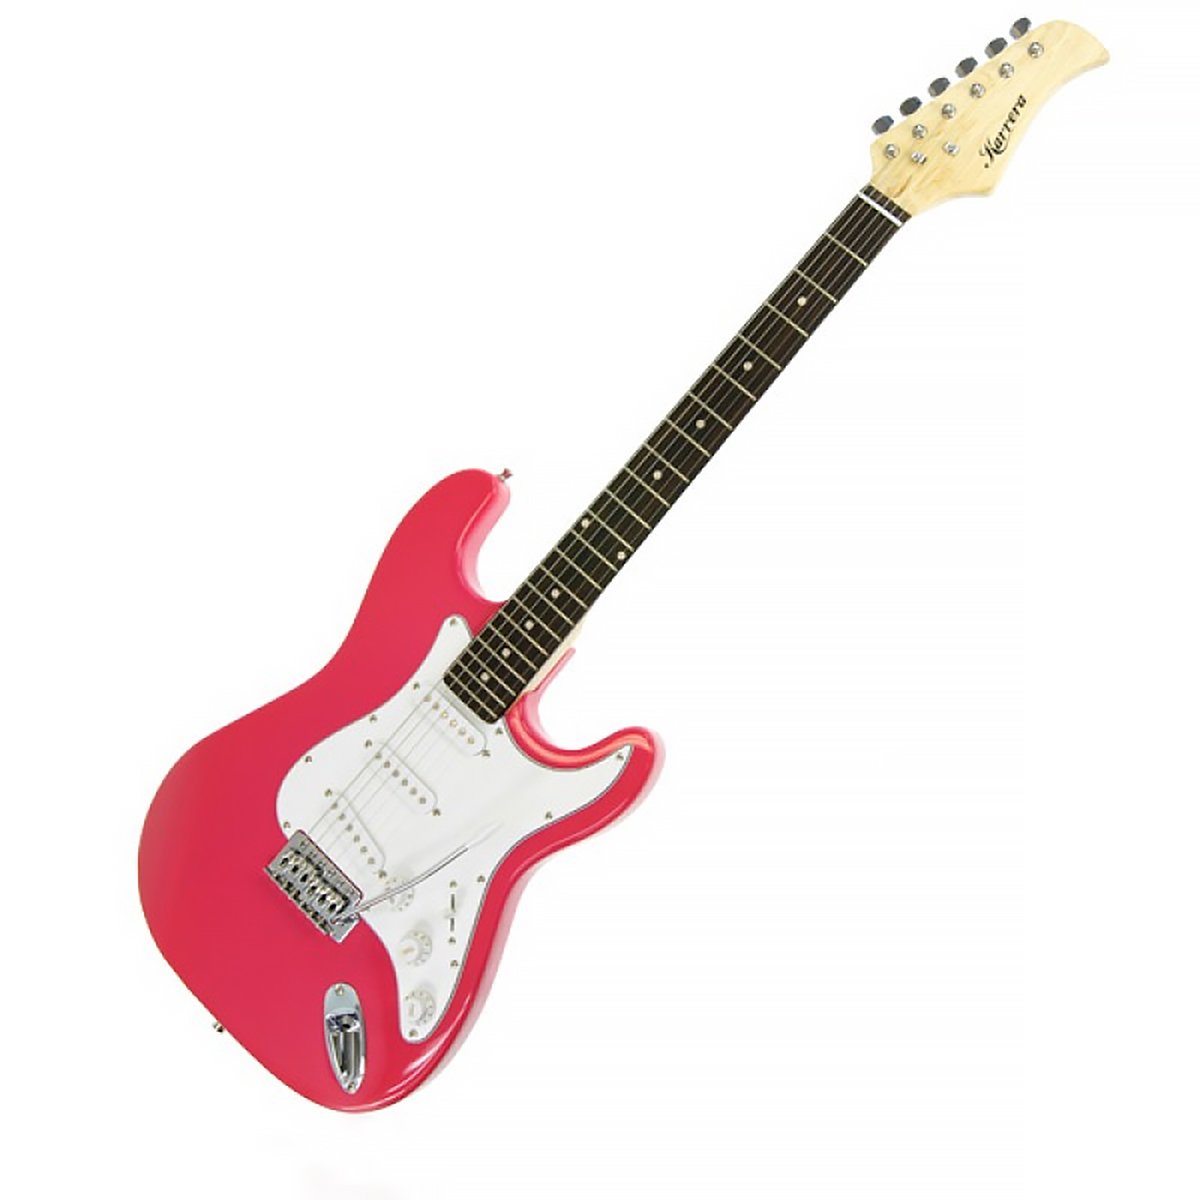 Karrera 39in Electric Guitar  - Pink - SILBERSHELL